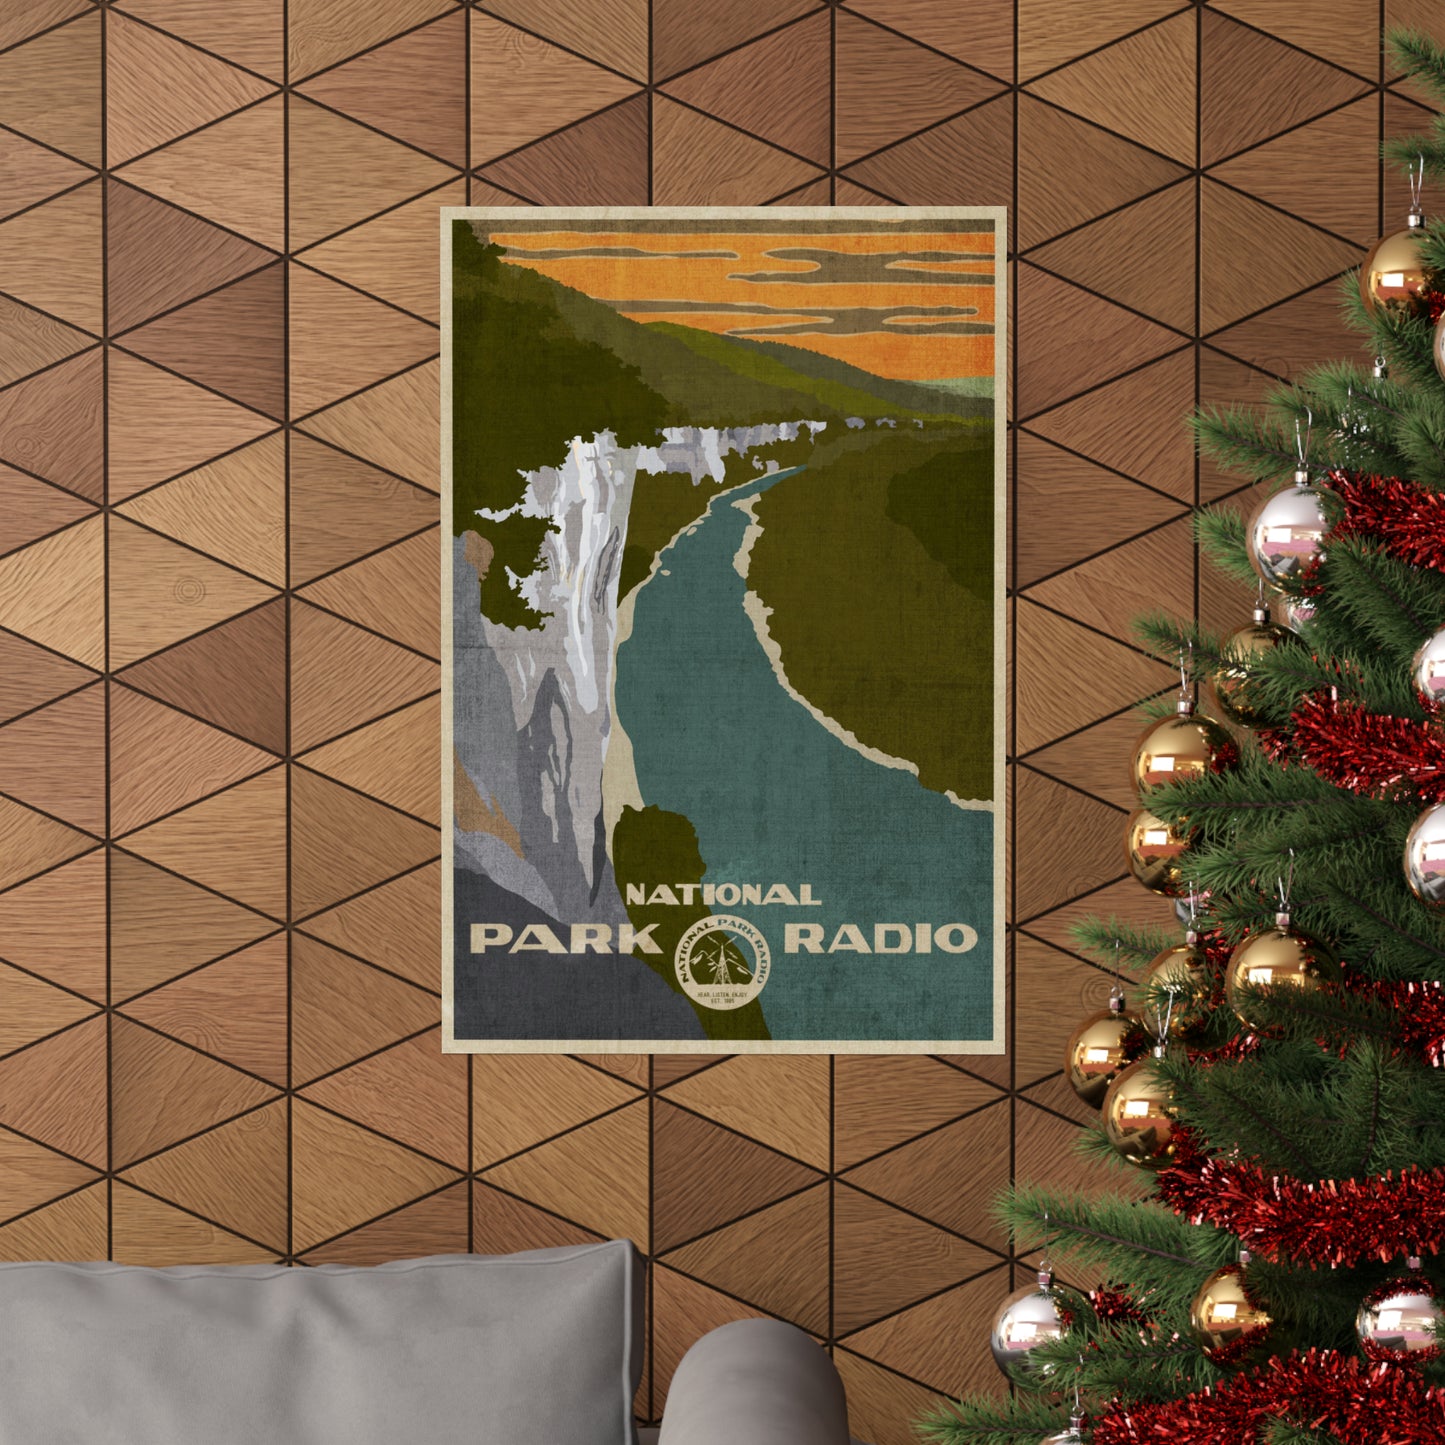 Original *Vintage* National Park Radio Poster - Buffalo National River